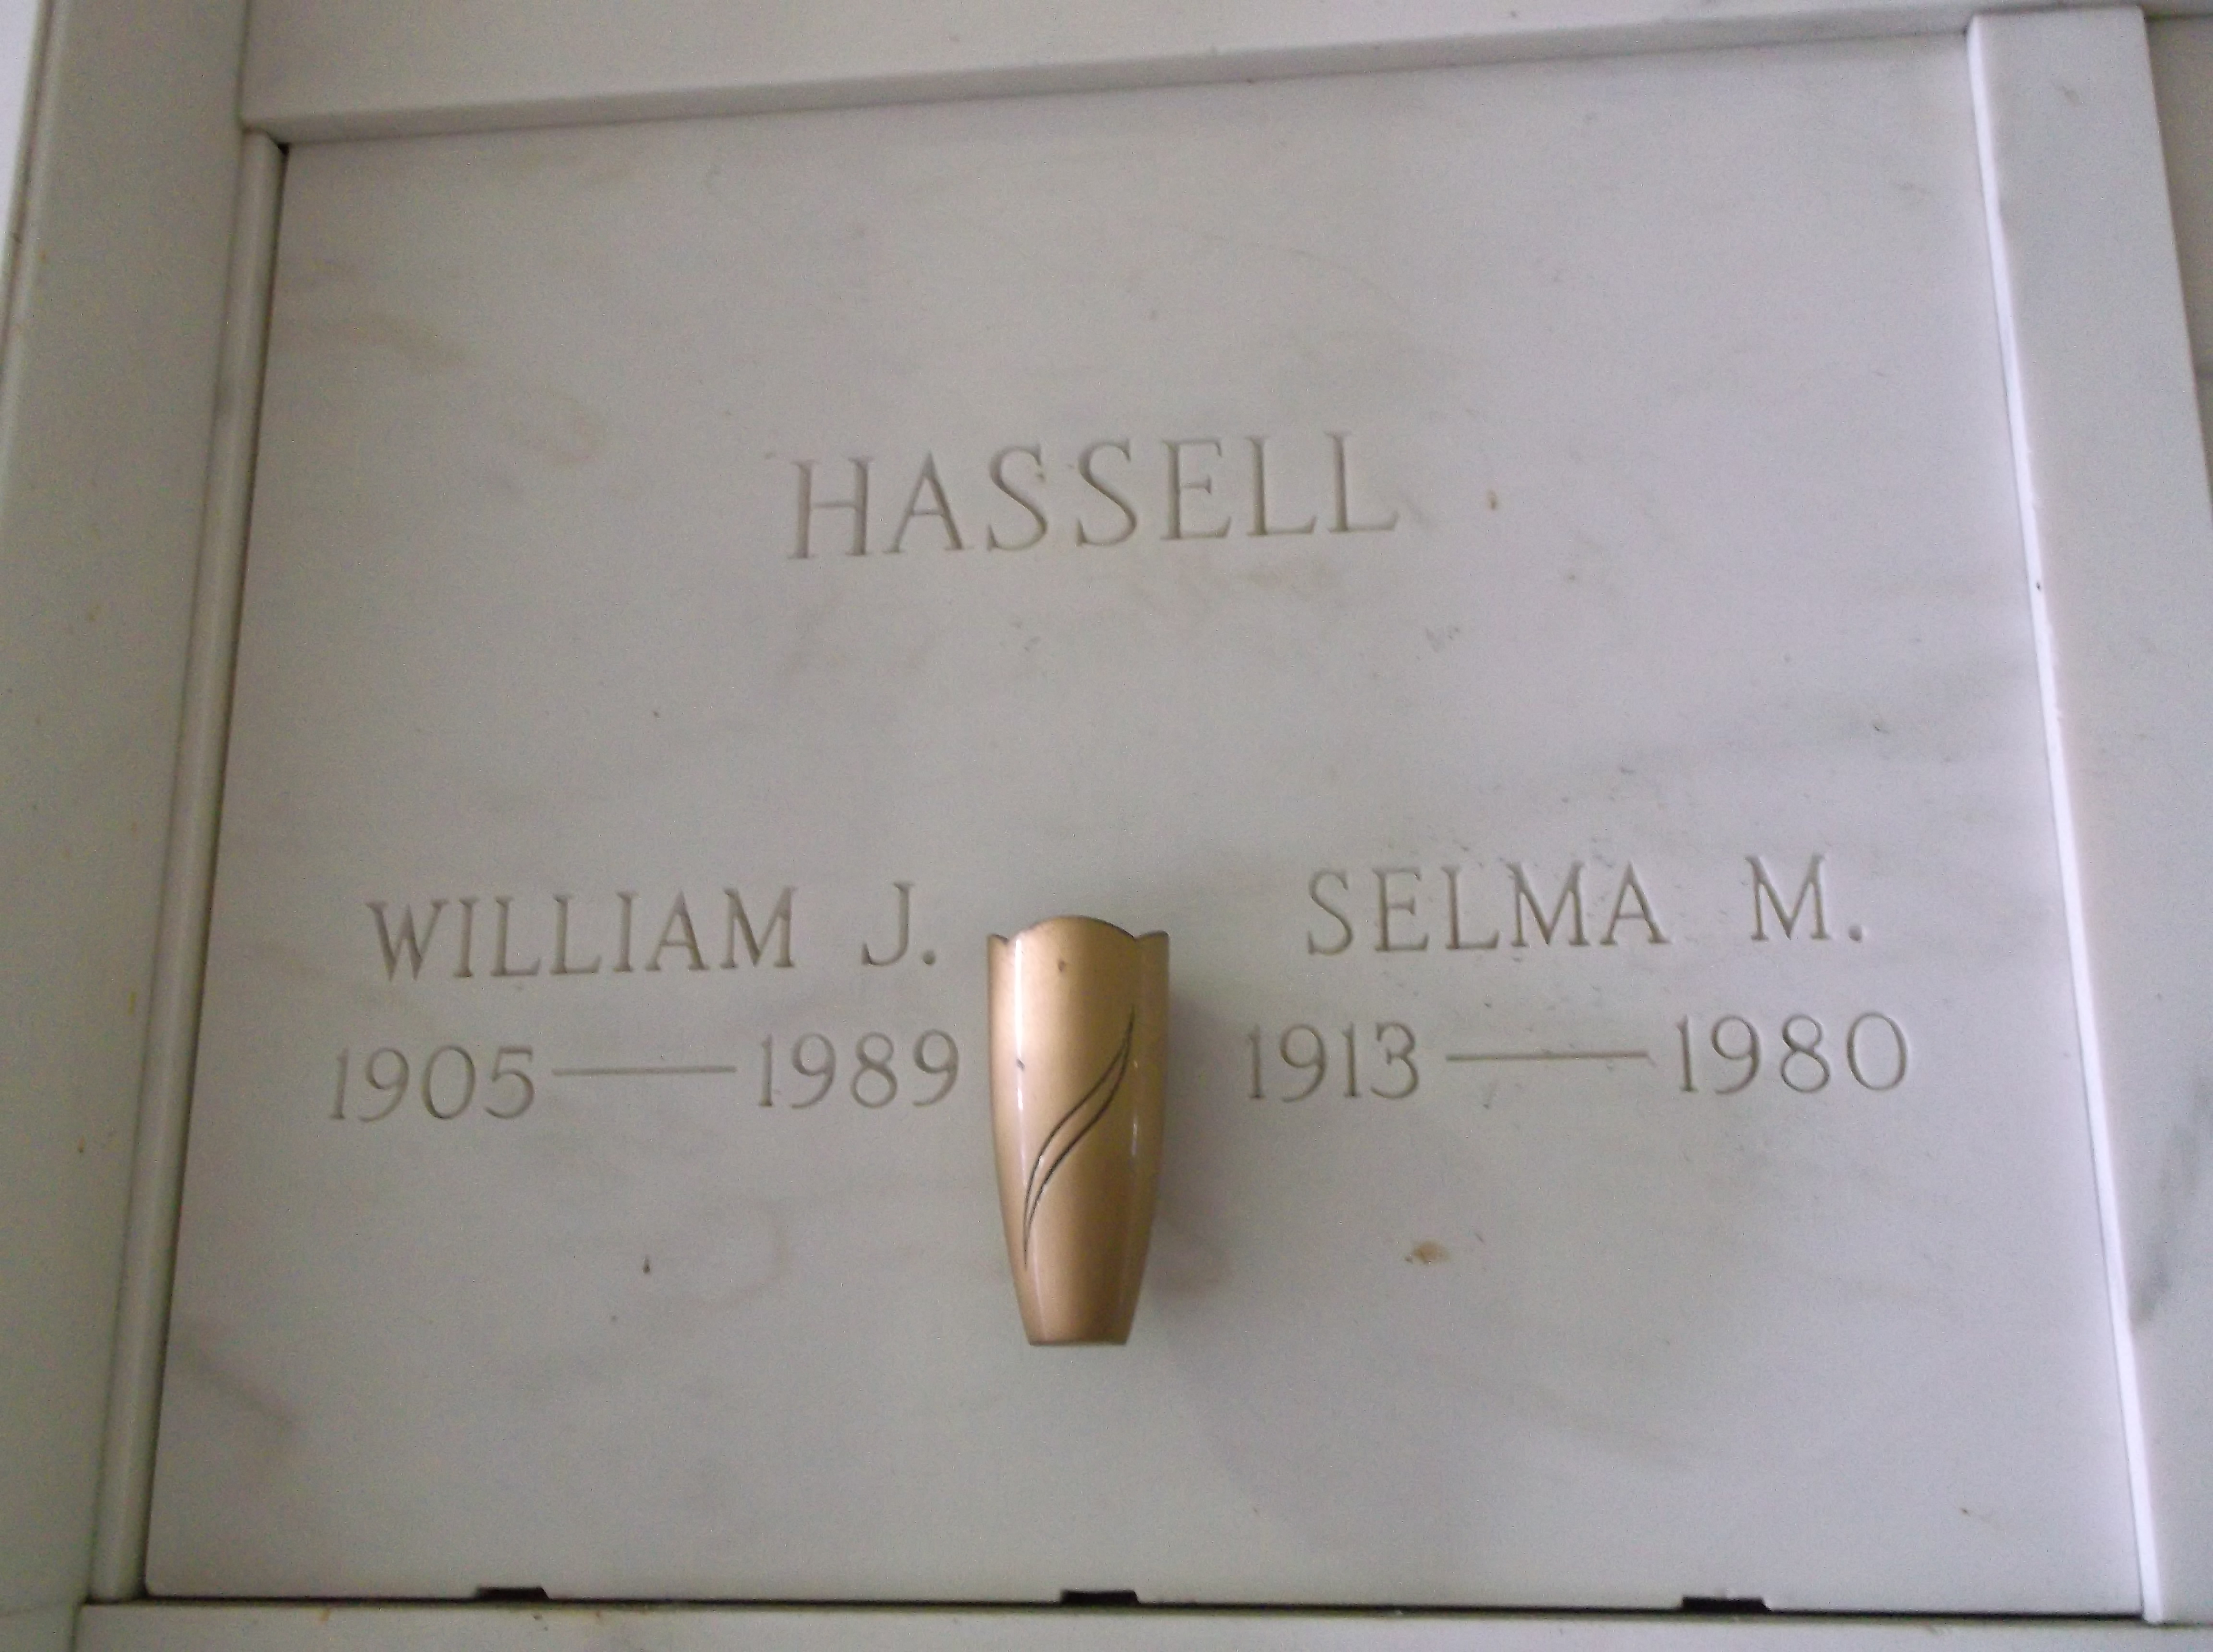 William J Hassell